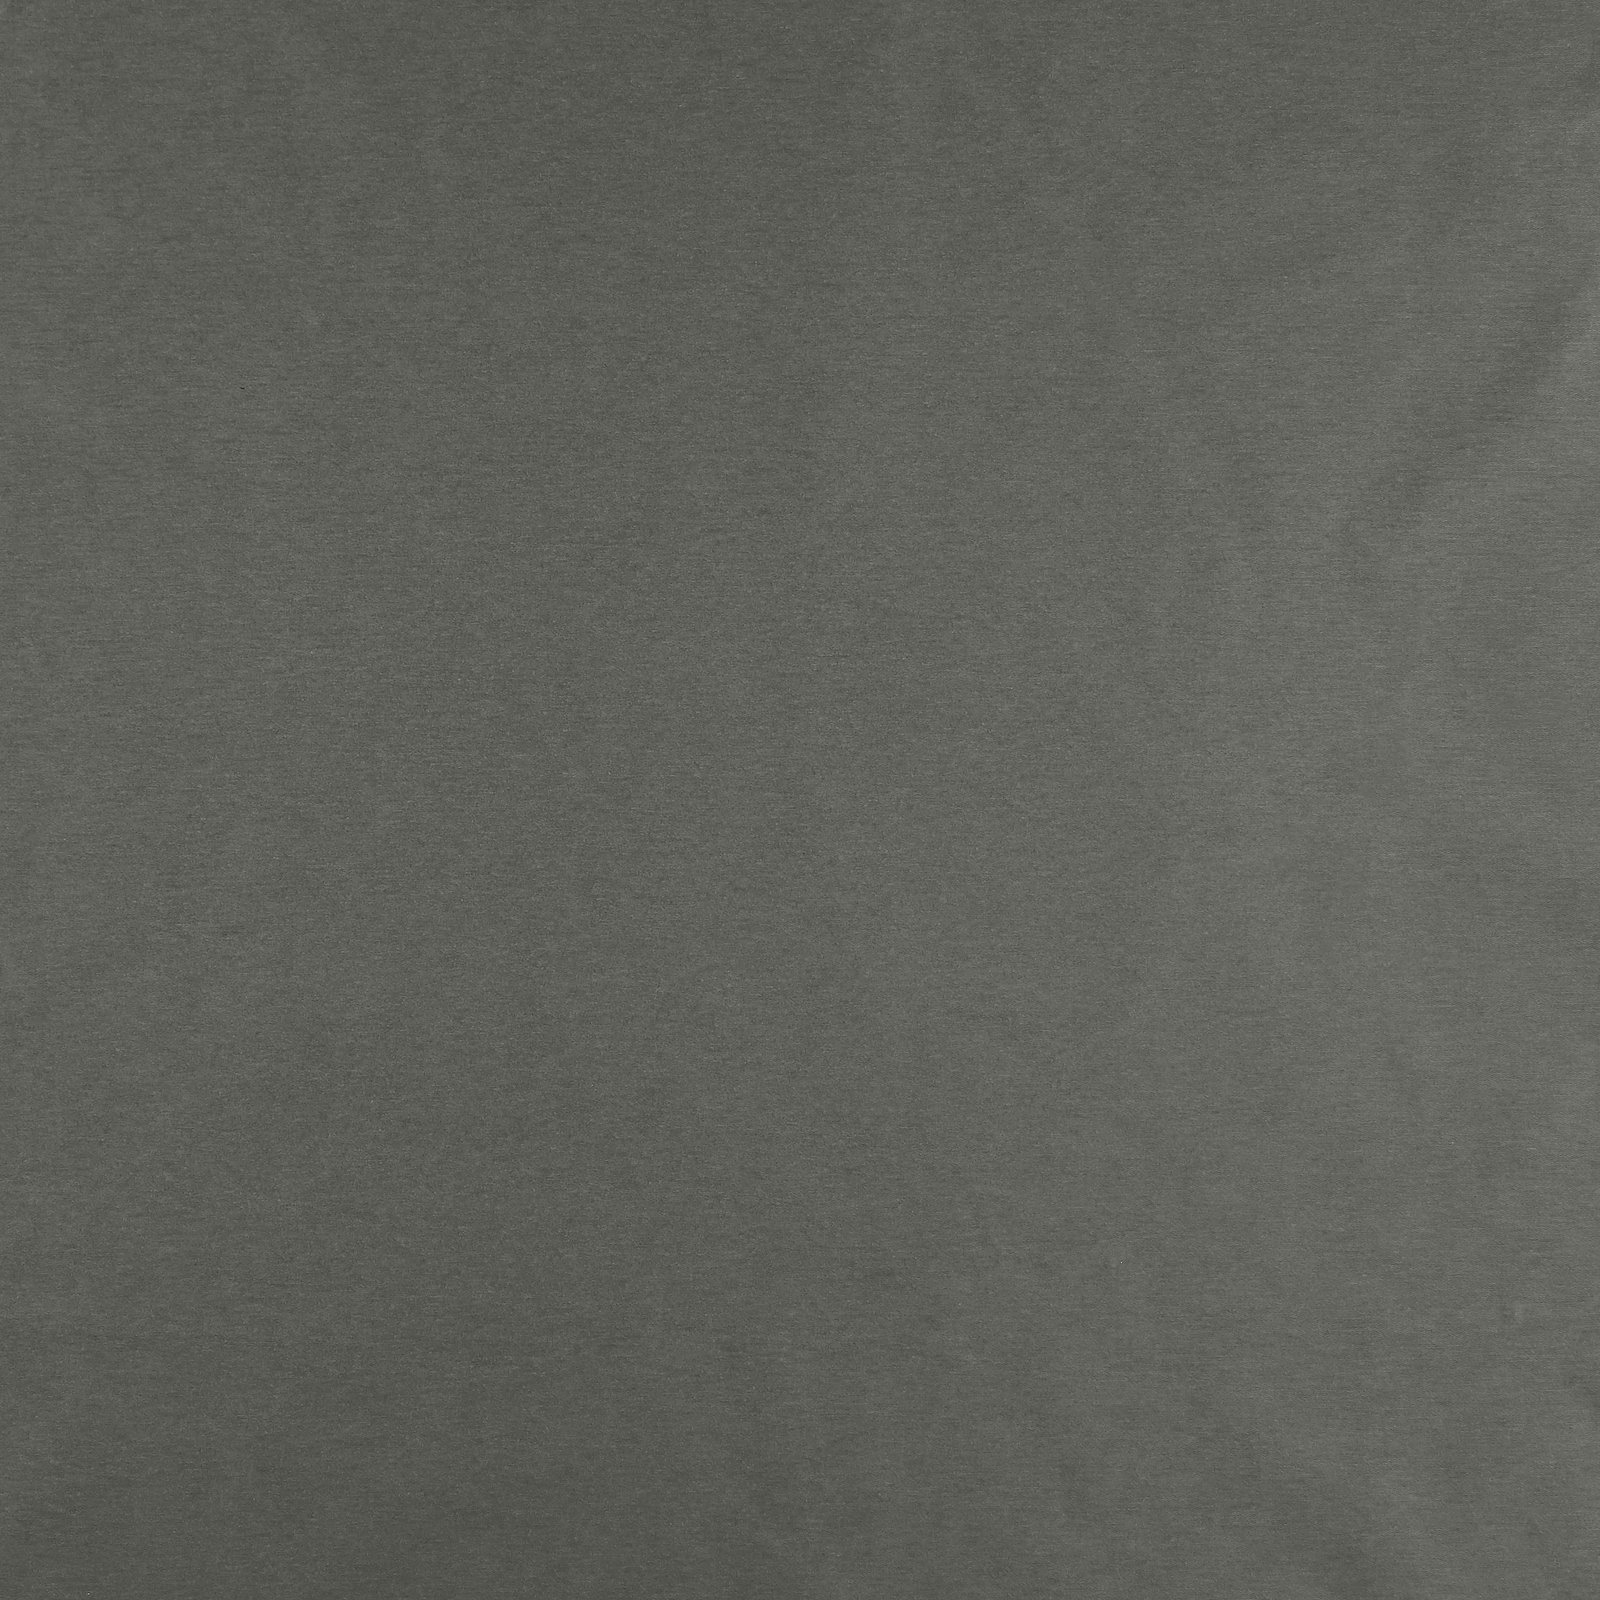 Textilvaxduk mörkgrå 158-160cm bred 870253_pack_solid